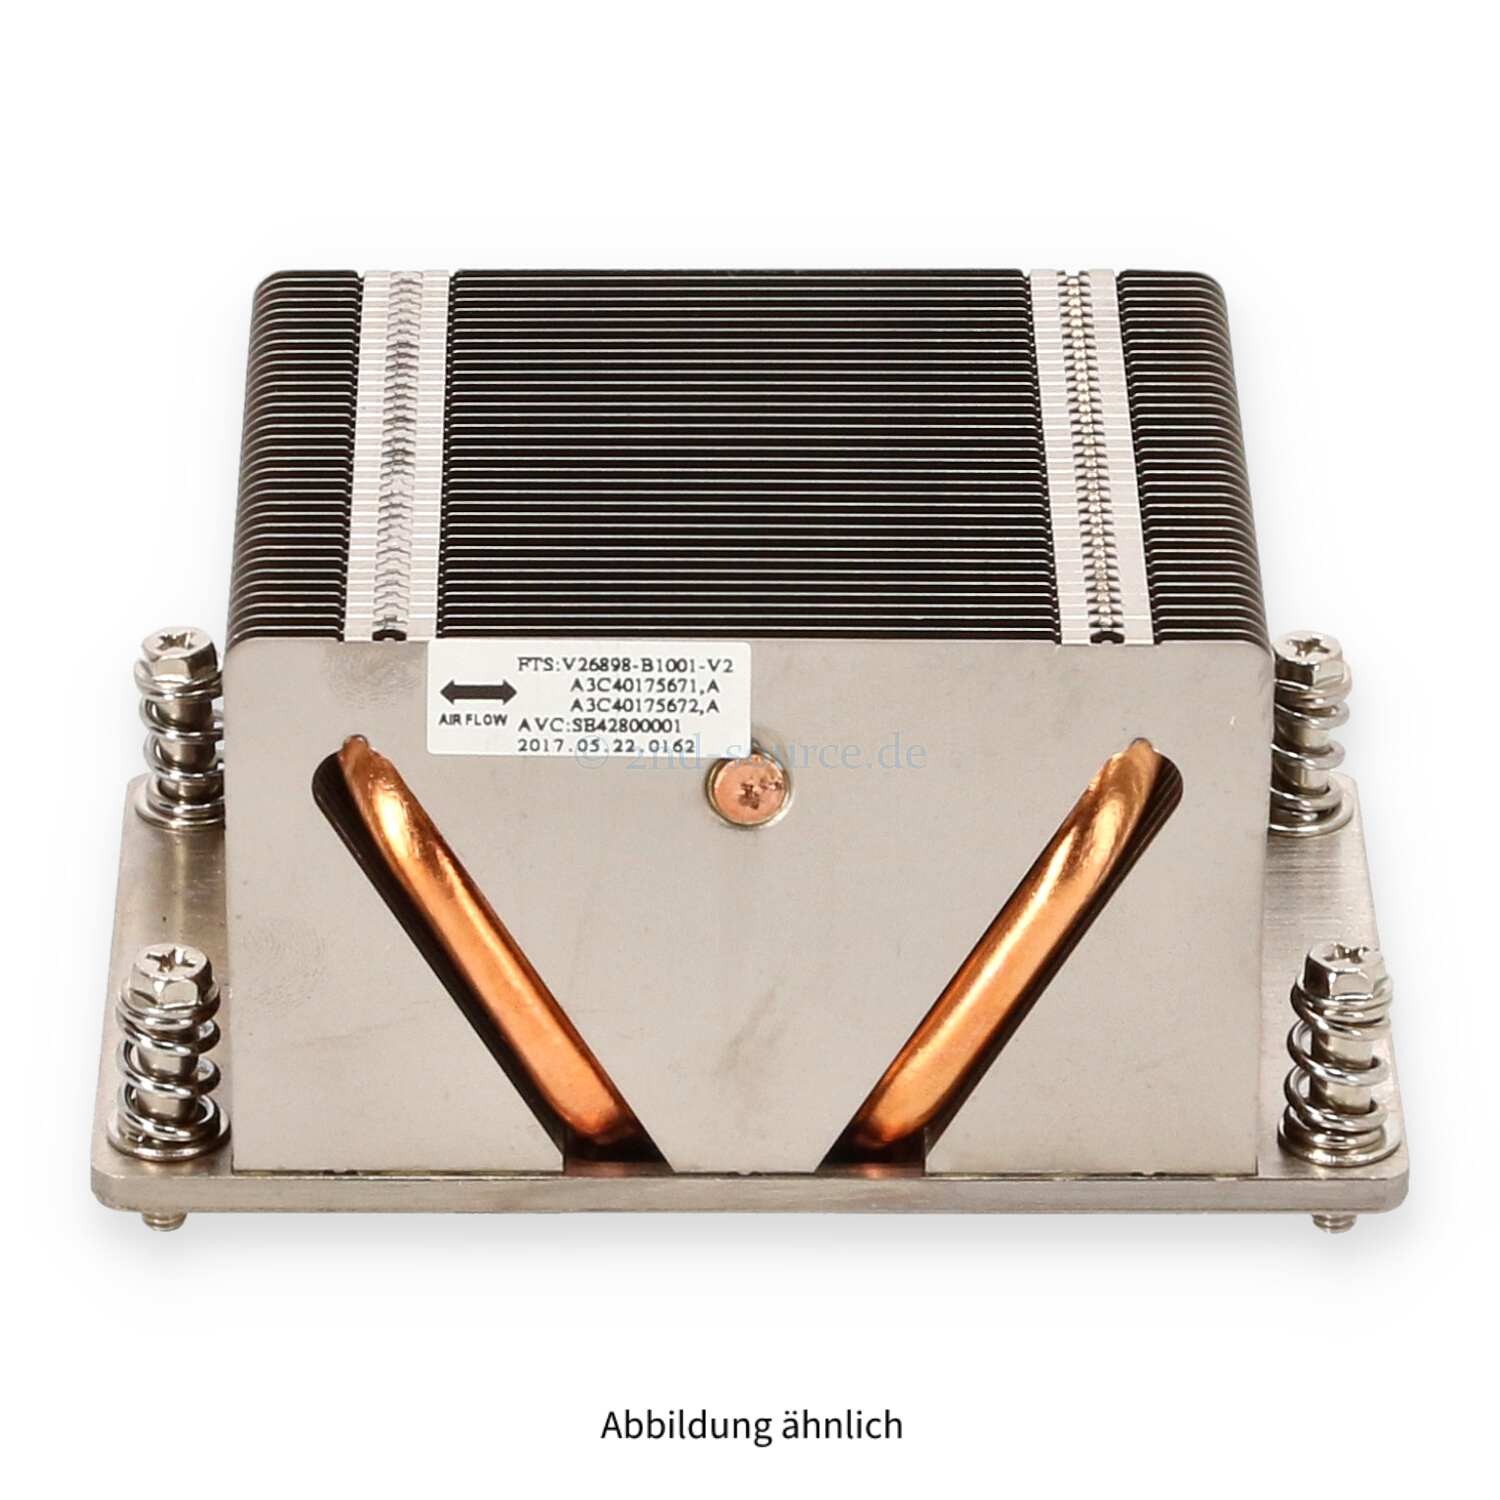 Fujitsu Performance Heatsink >120W RX2540 M1 M2 V26898-B1001-V2 38041726